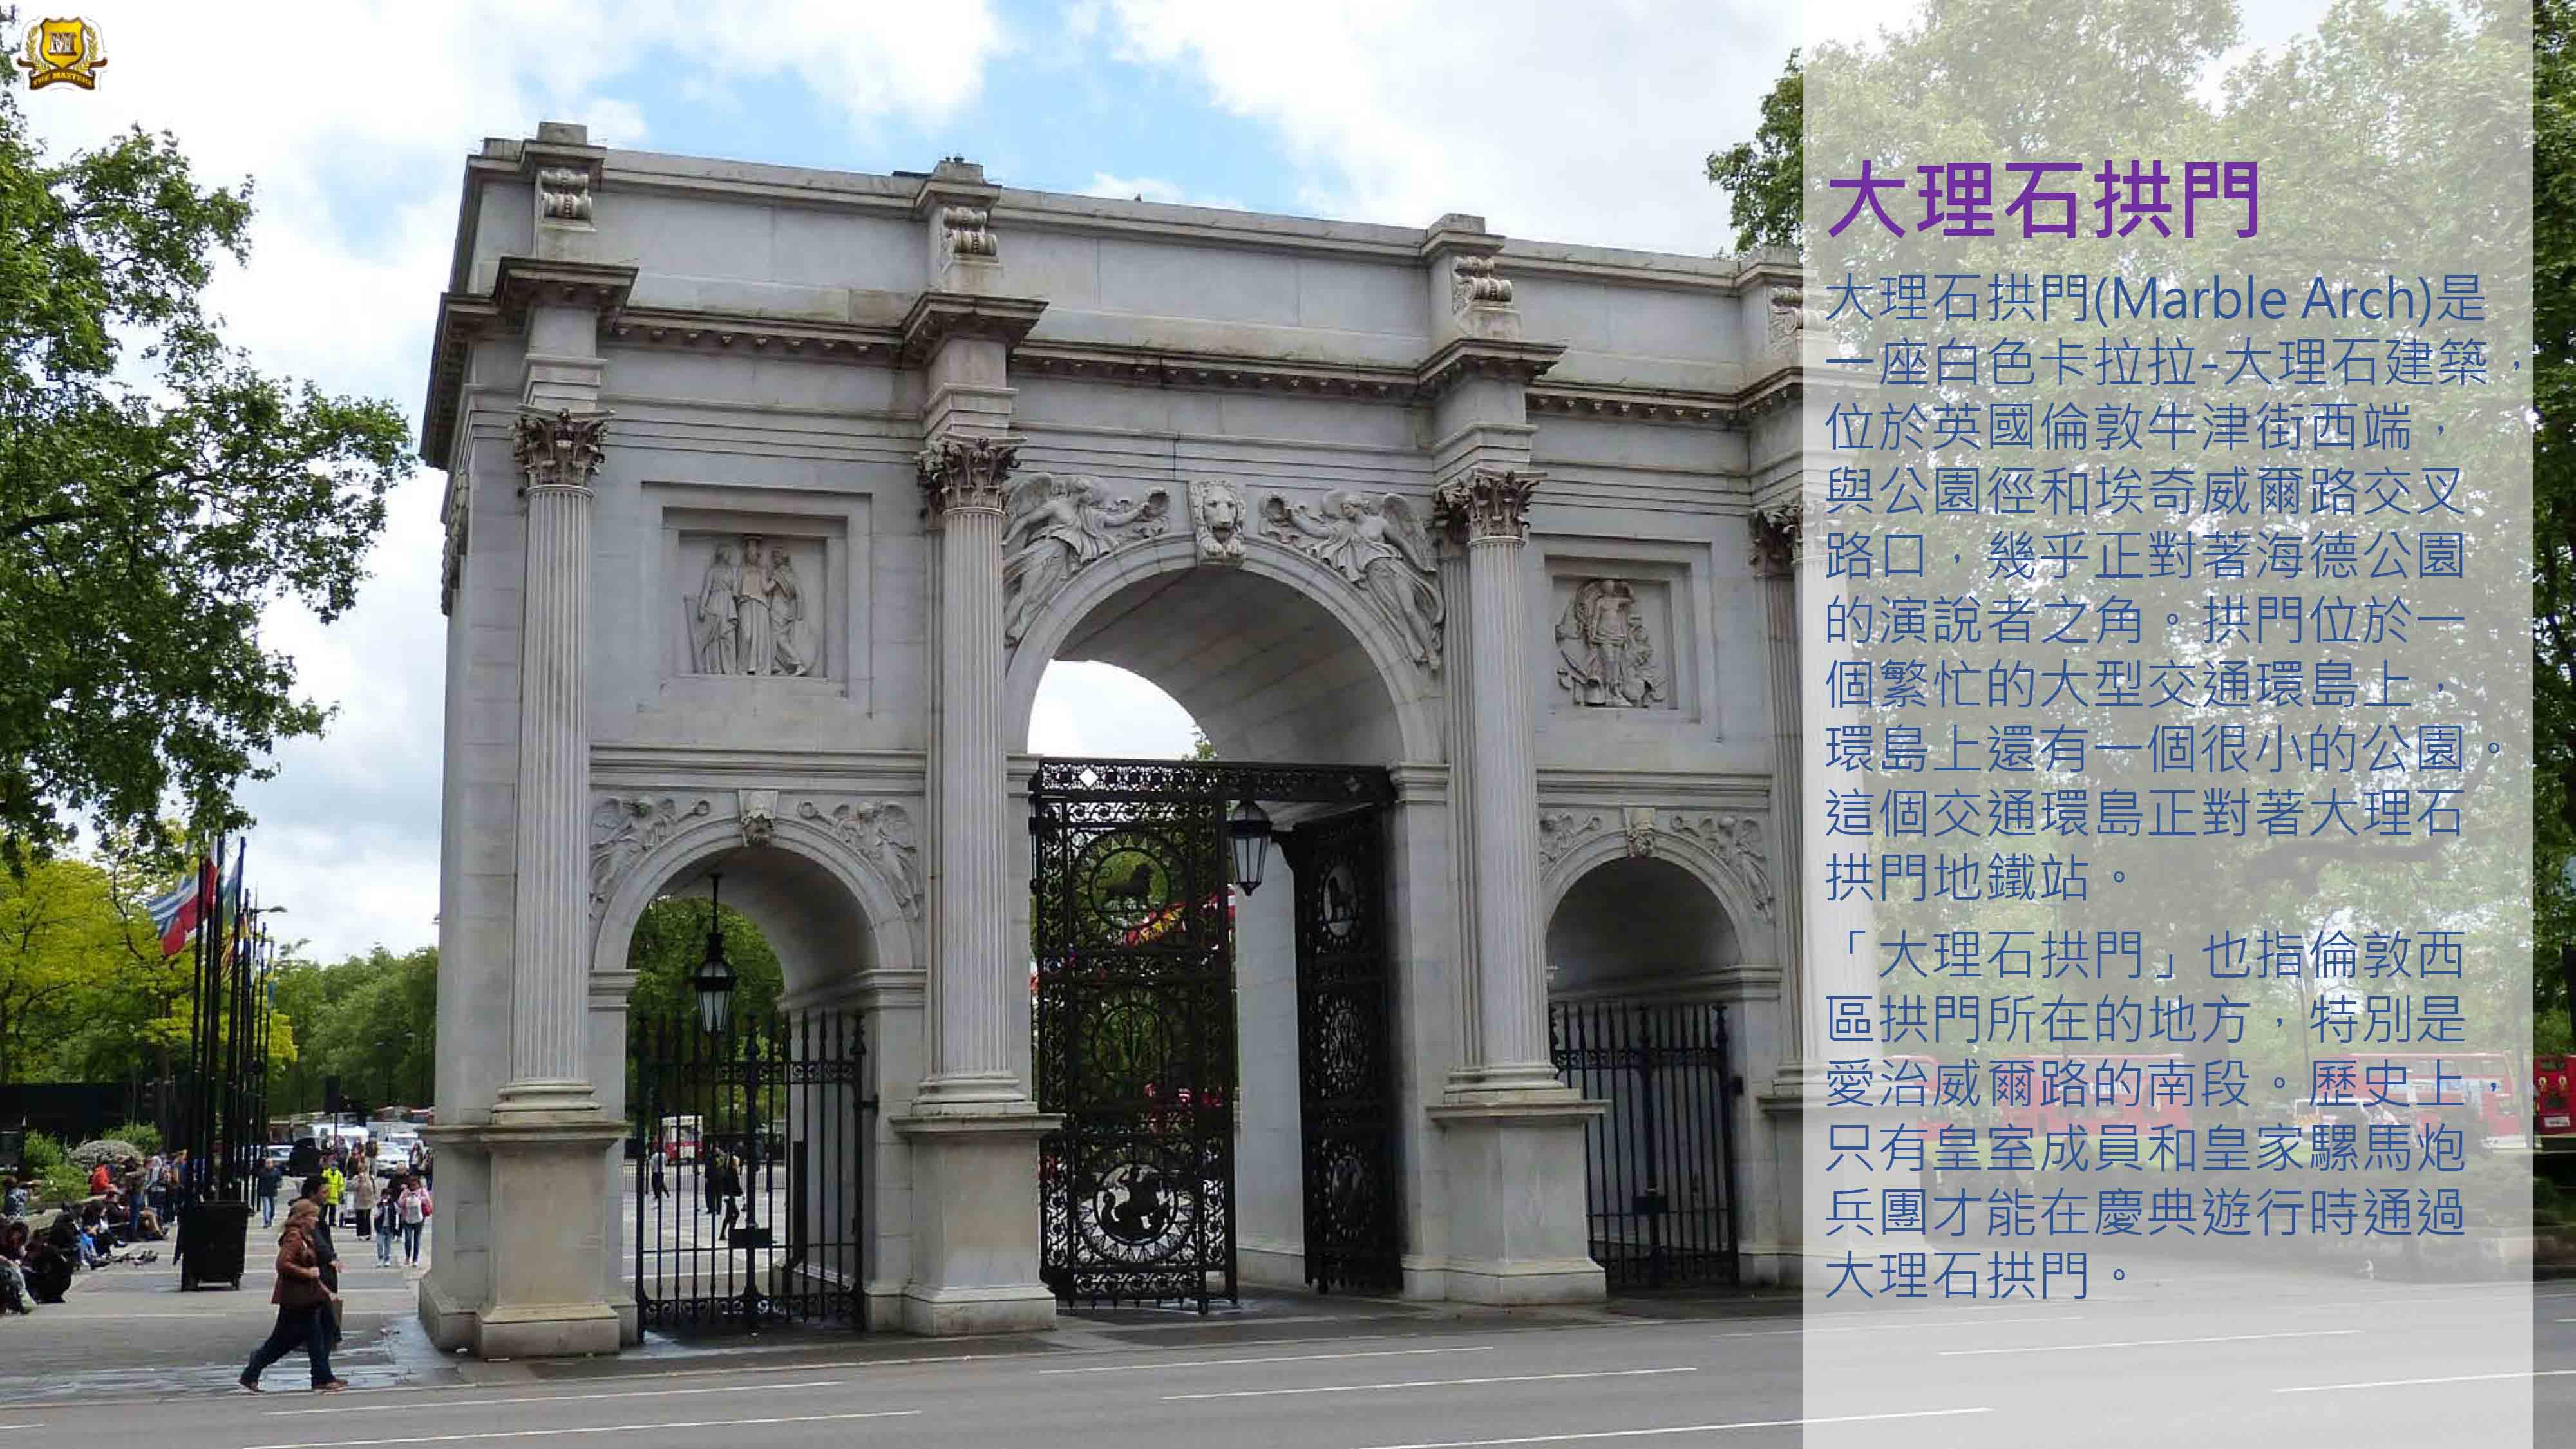 大理石拱門 Marble Arch